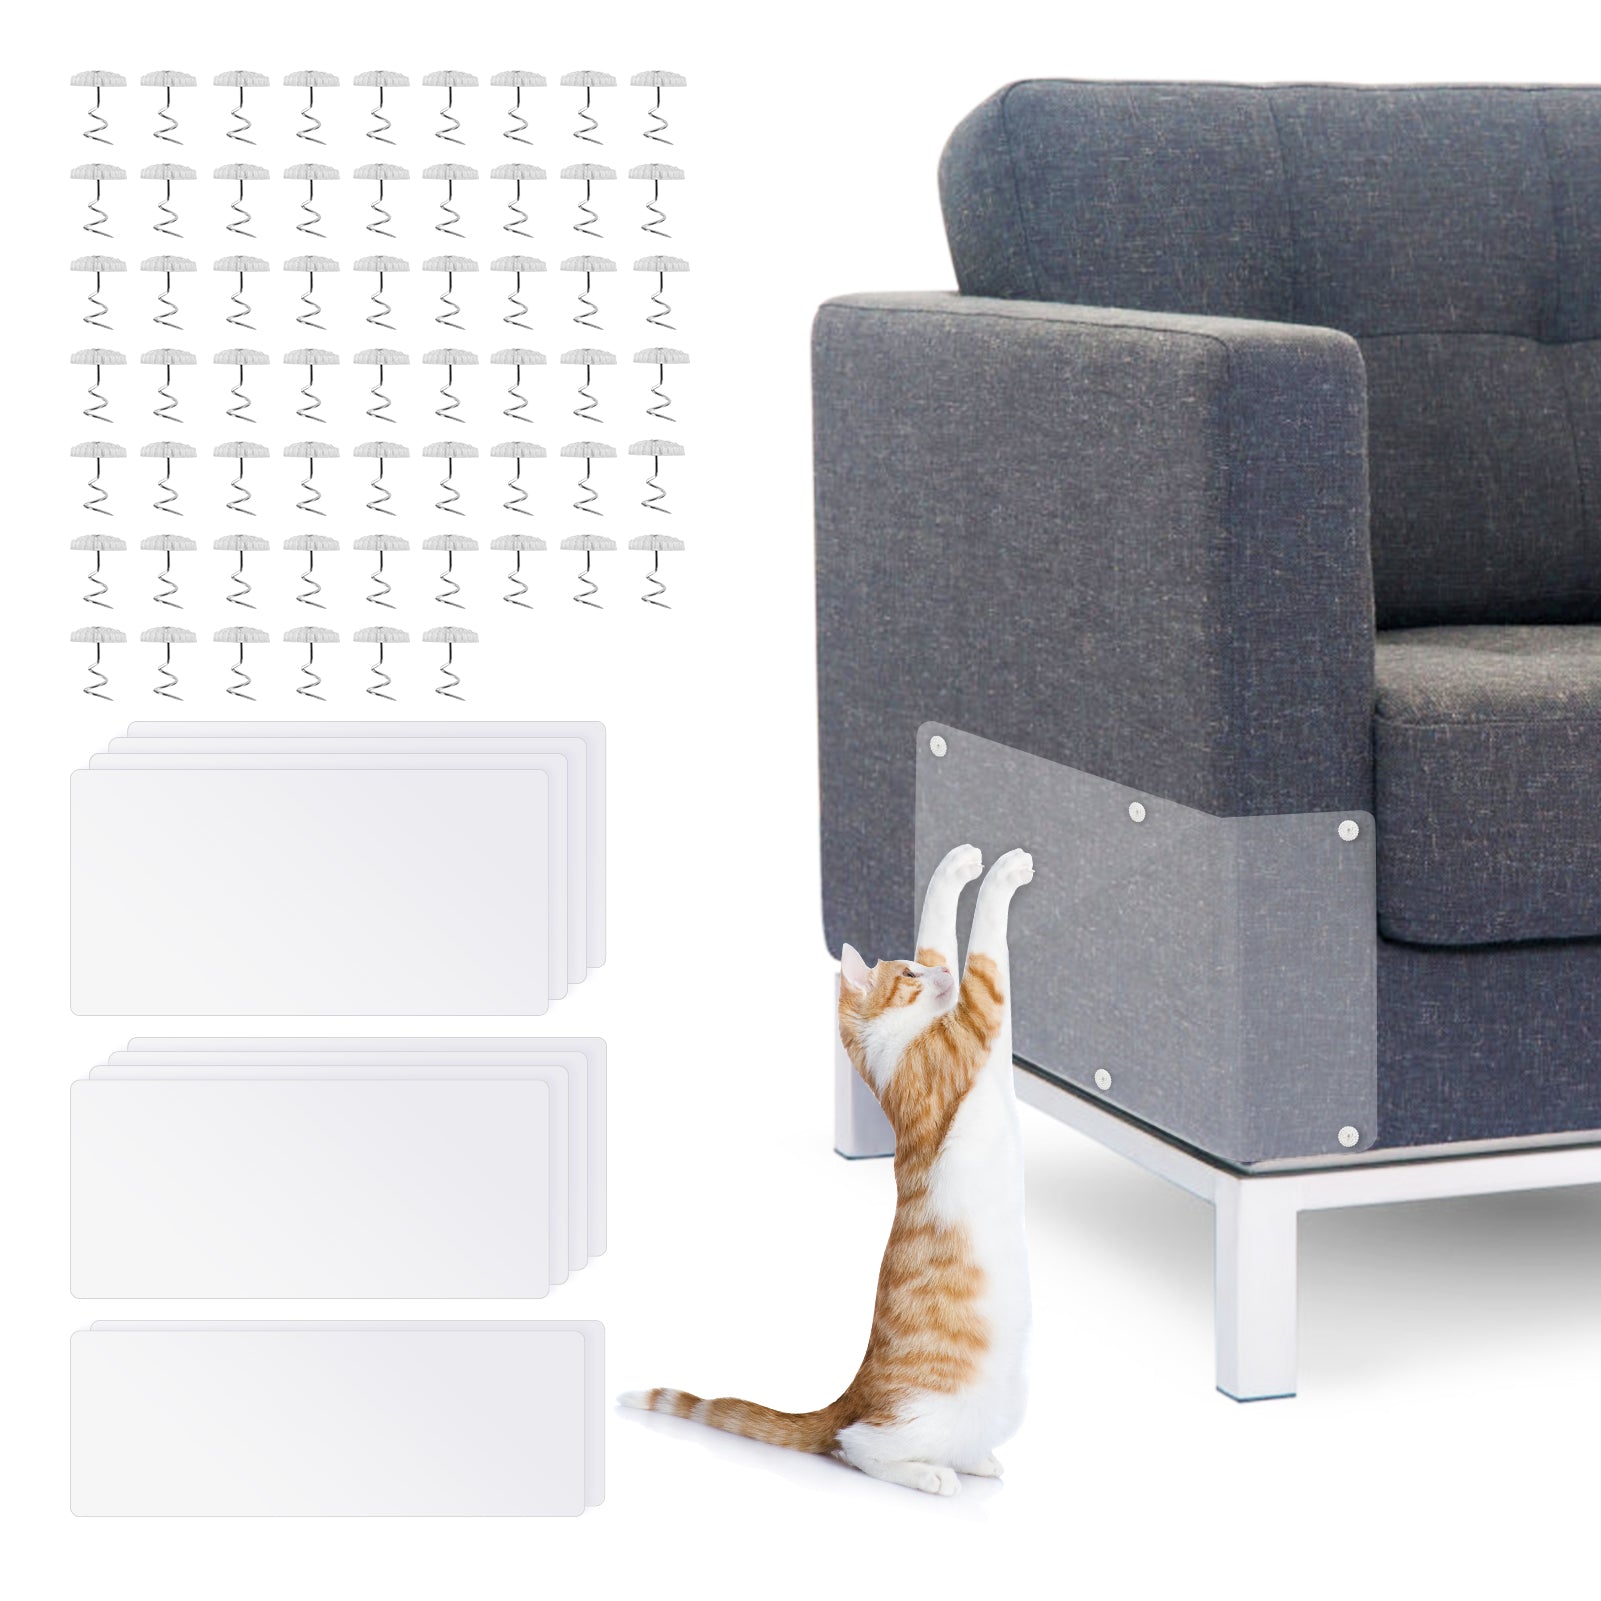 Nábytek pro batole Couch Gap Blocker Sofa Stopper za 252 Kč - Allegro